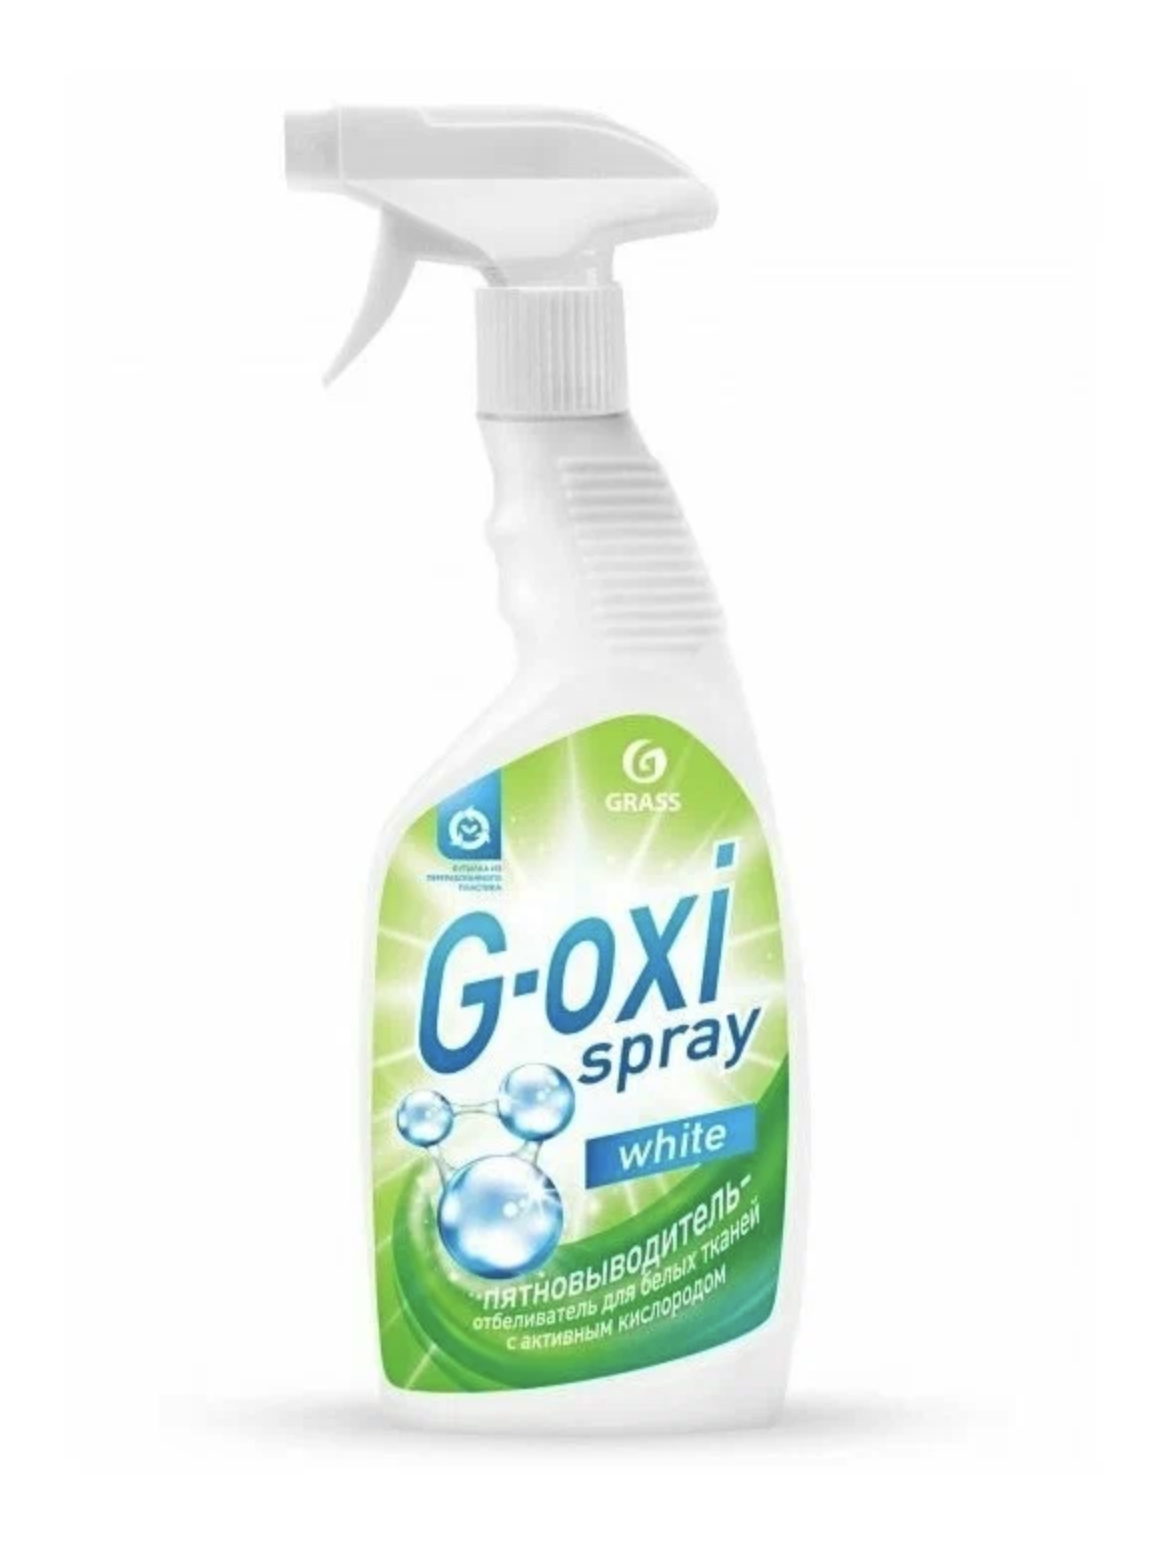   / Grass G-Oxi spray - -    White 600 